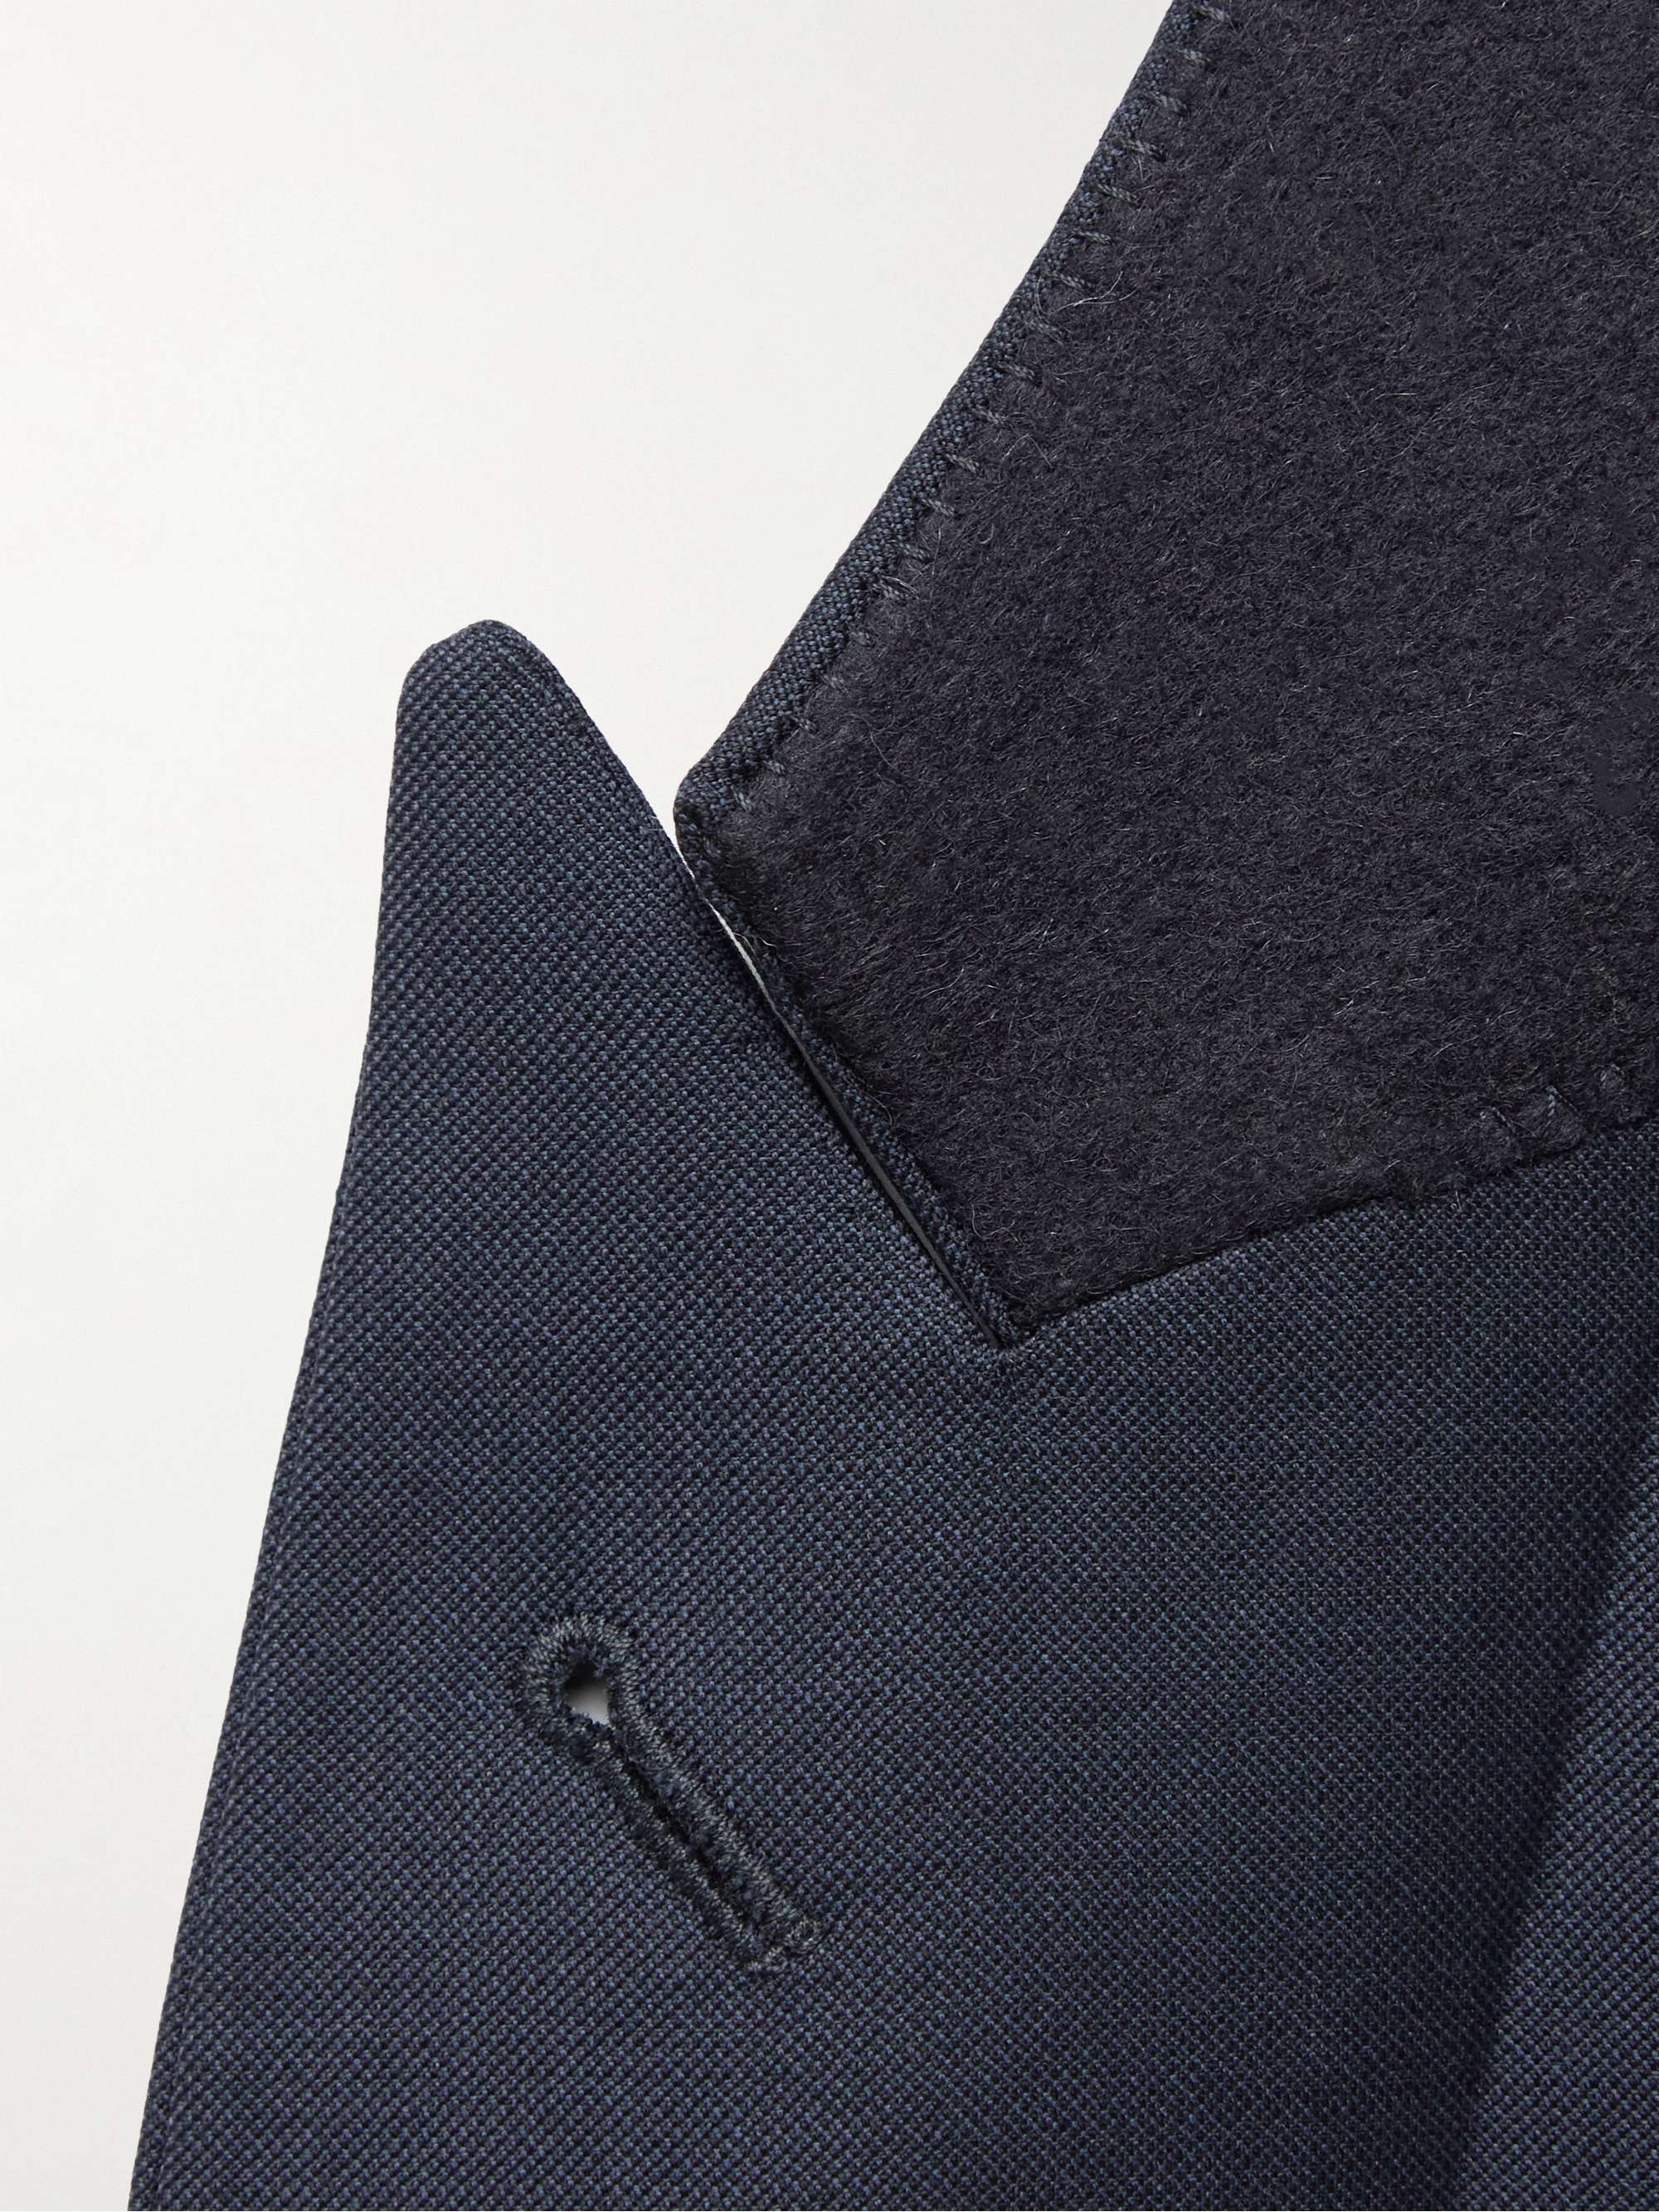 FAVOURBROOK Newport Slim-Fit Wool Suit Jacket